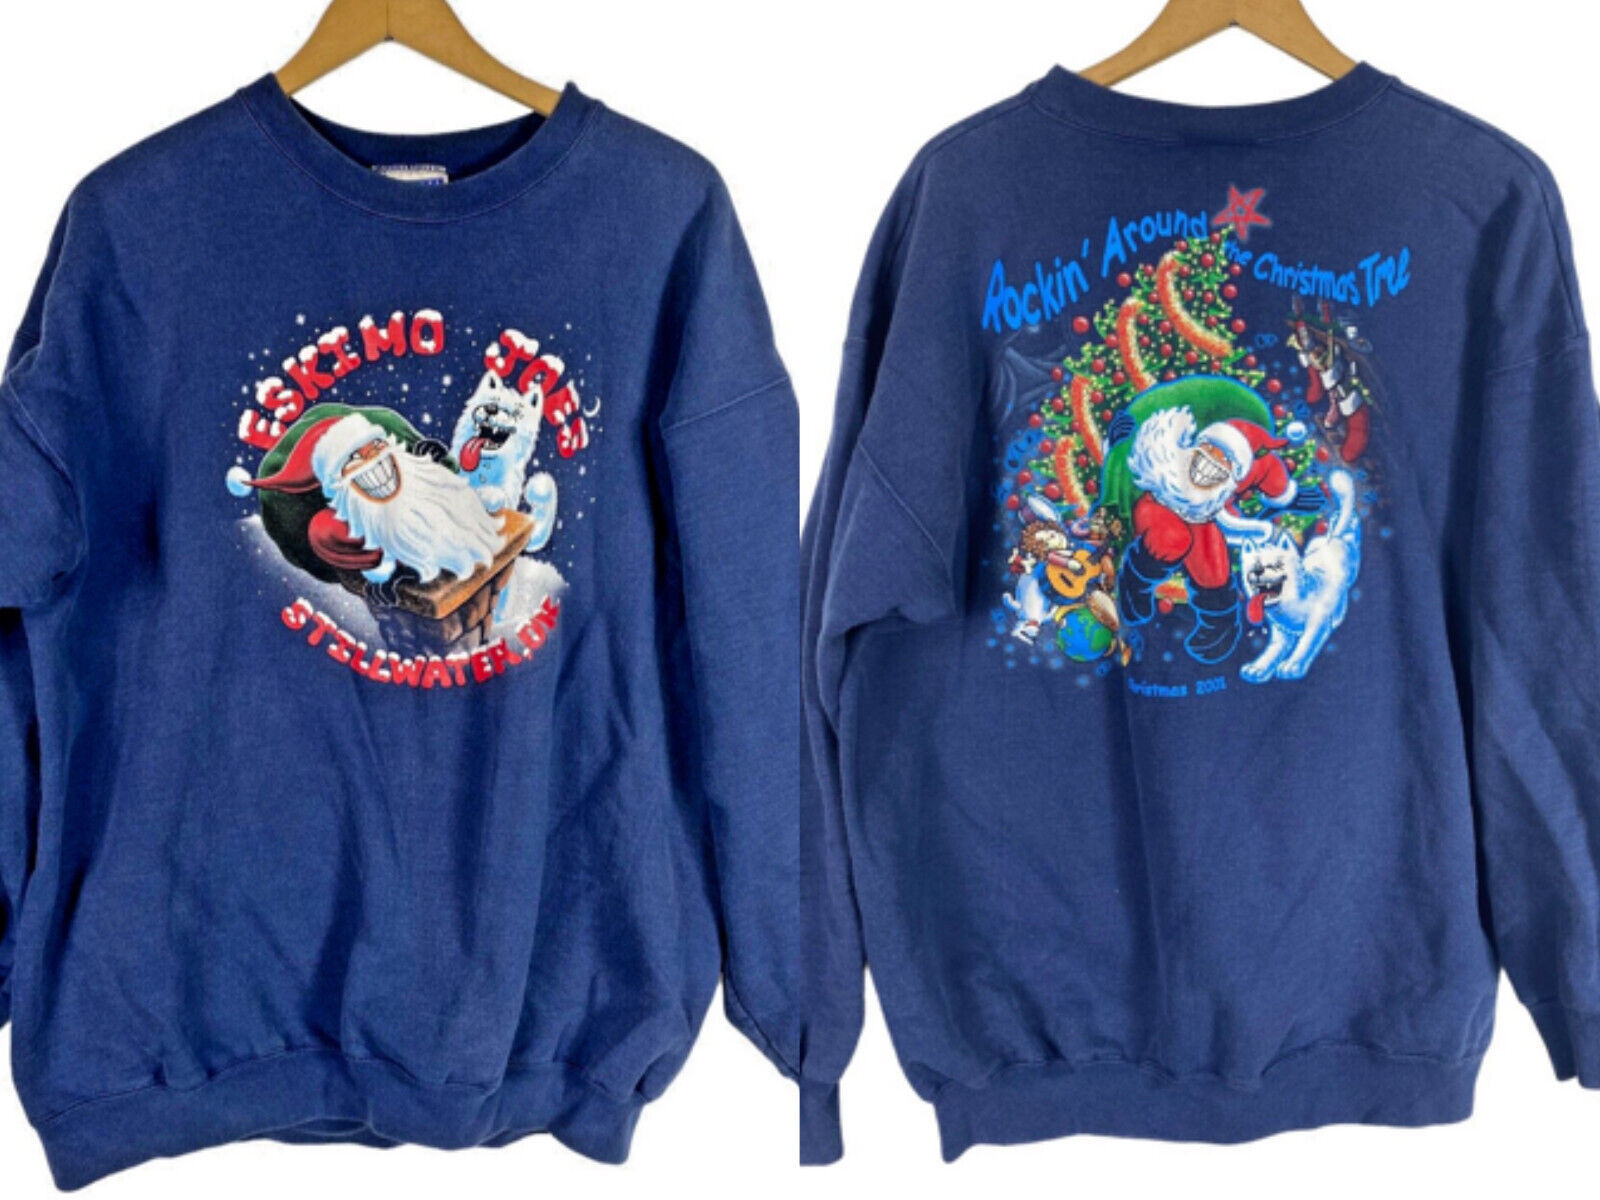 Primary image for Eskimo Joes Sweatshirt Size Large Christmas Santa 2001 Rockin Round Tree Vintage